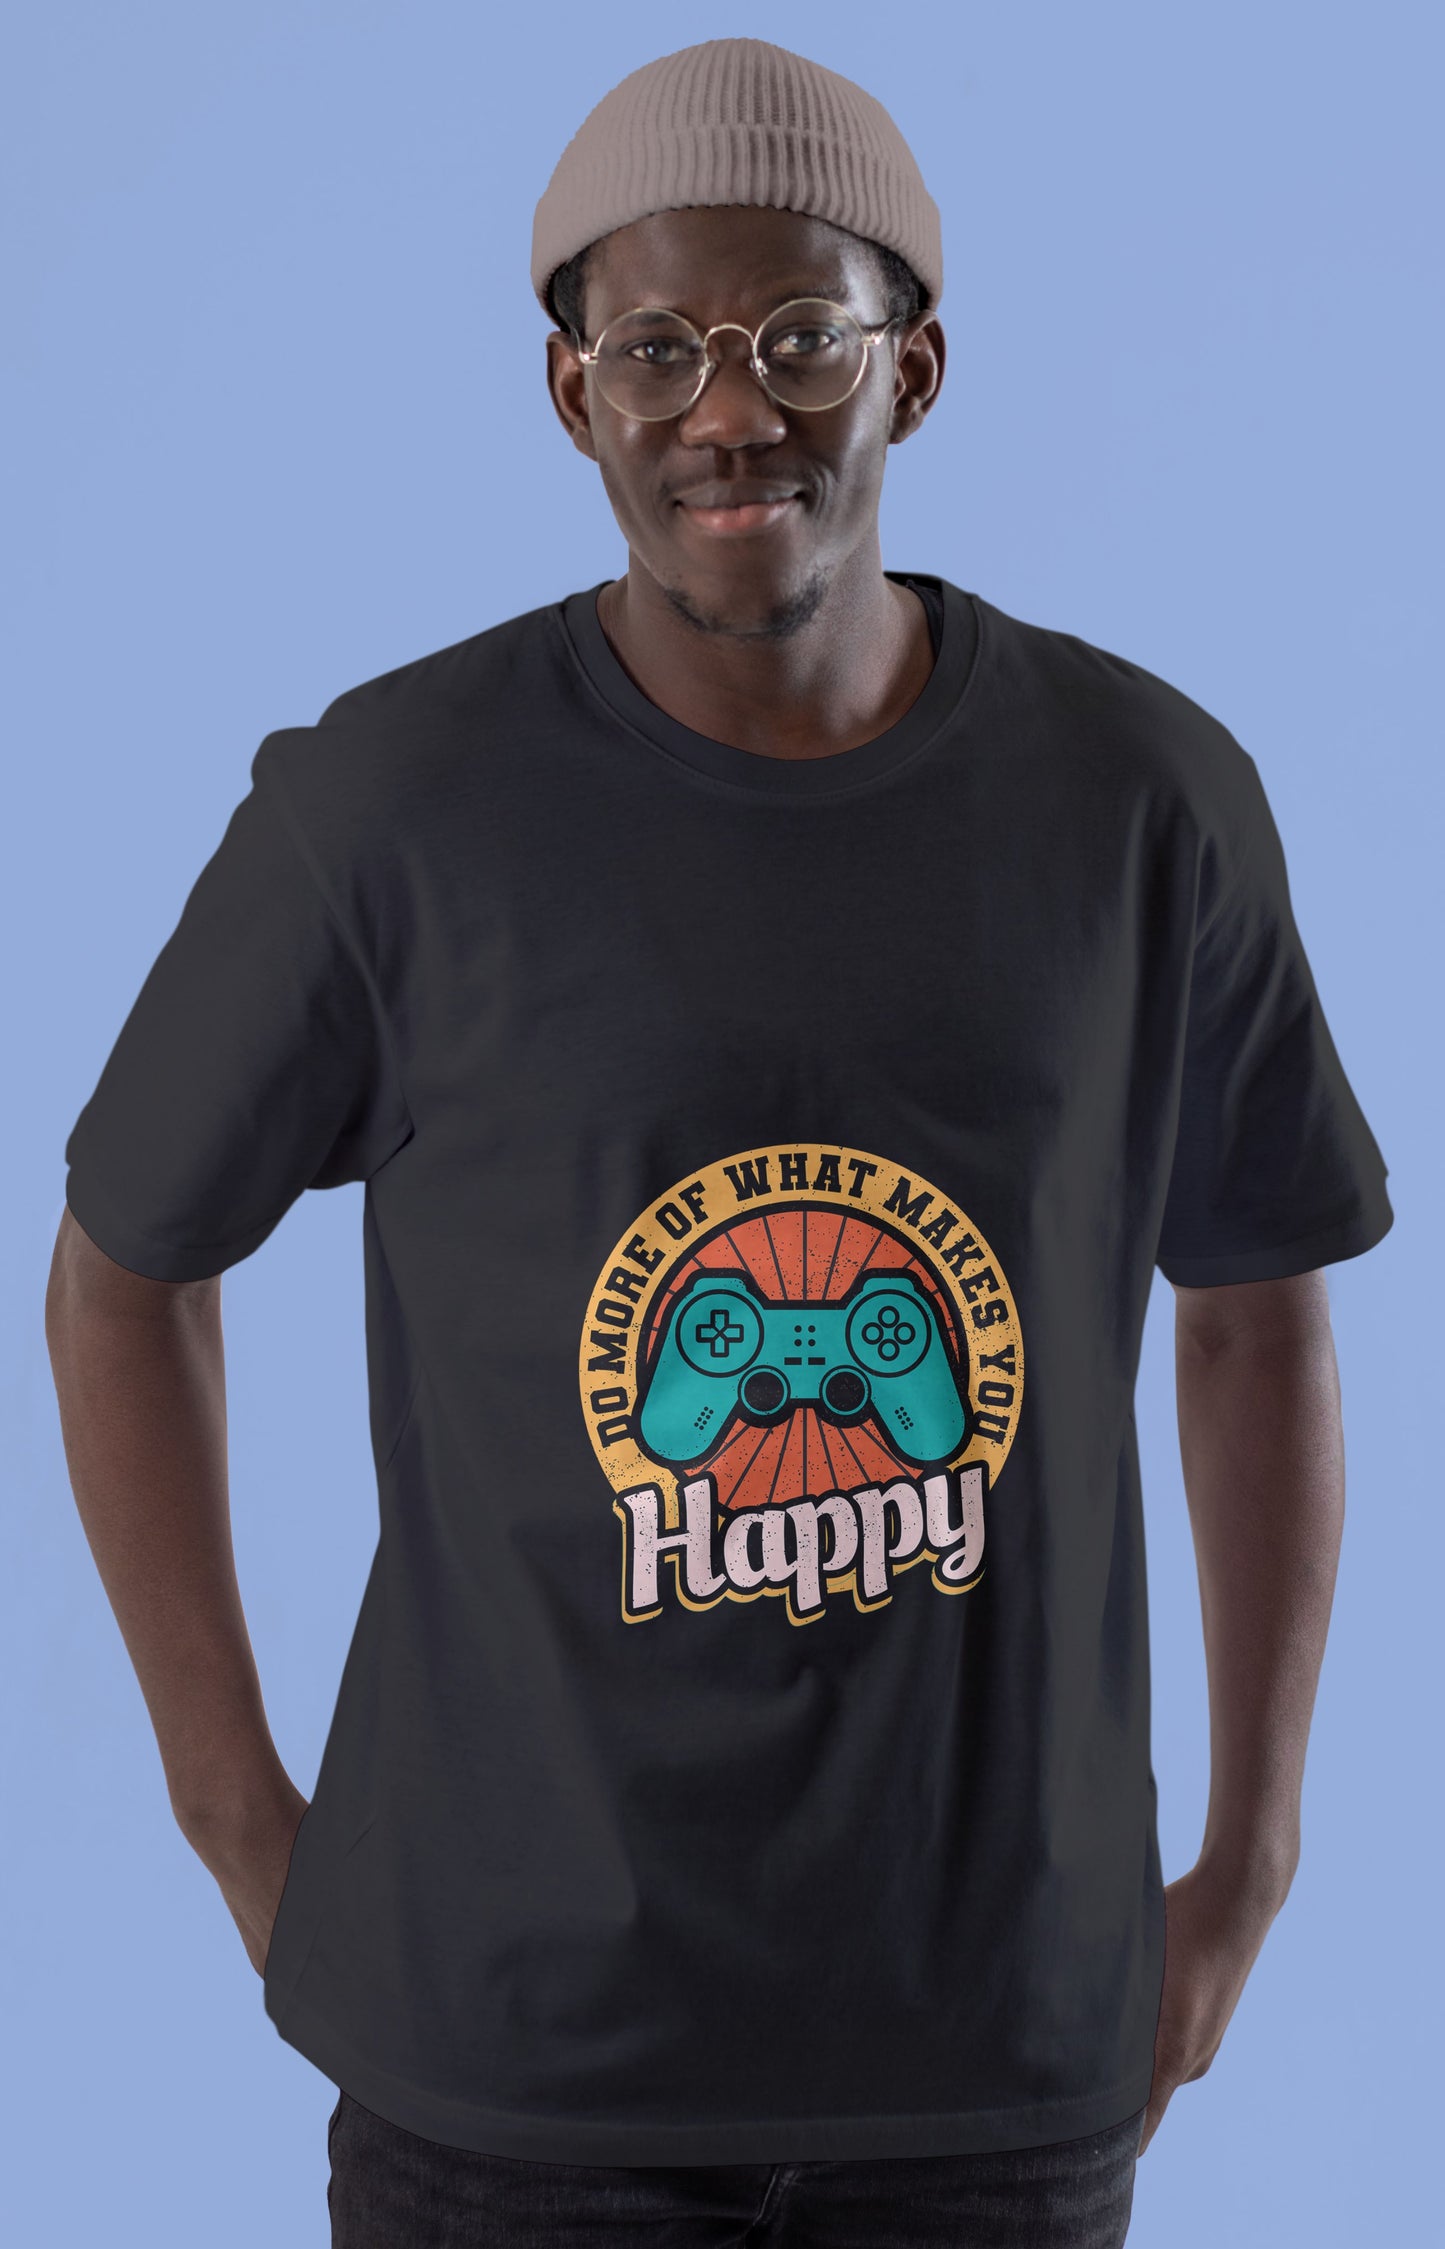 Happy design t shirt